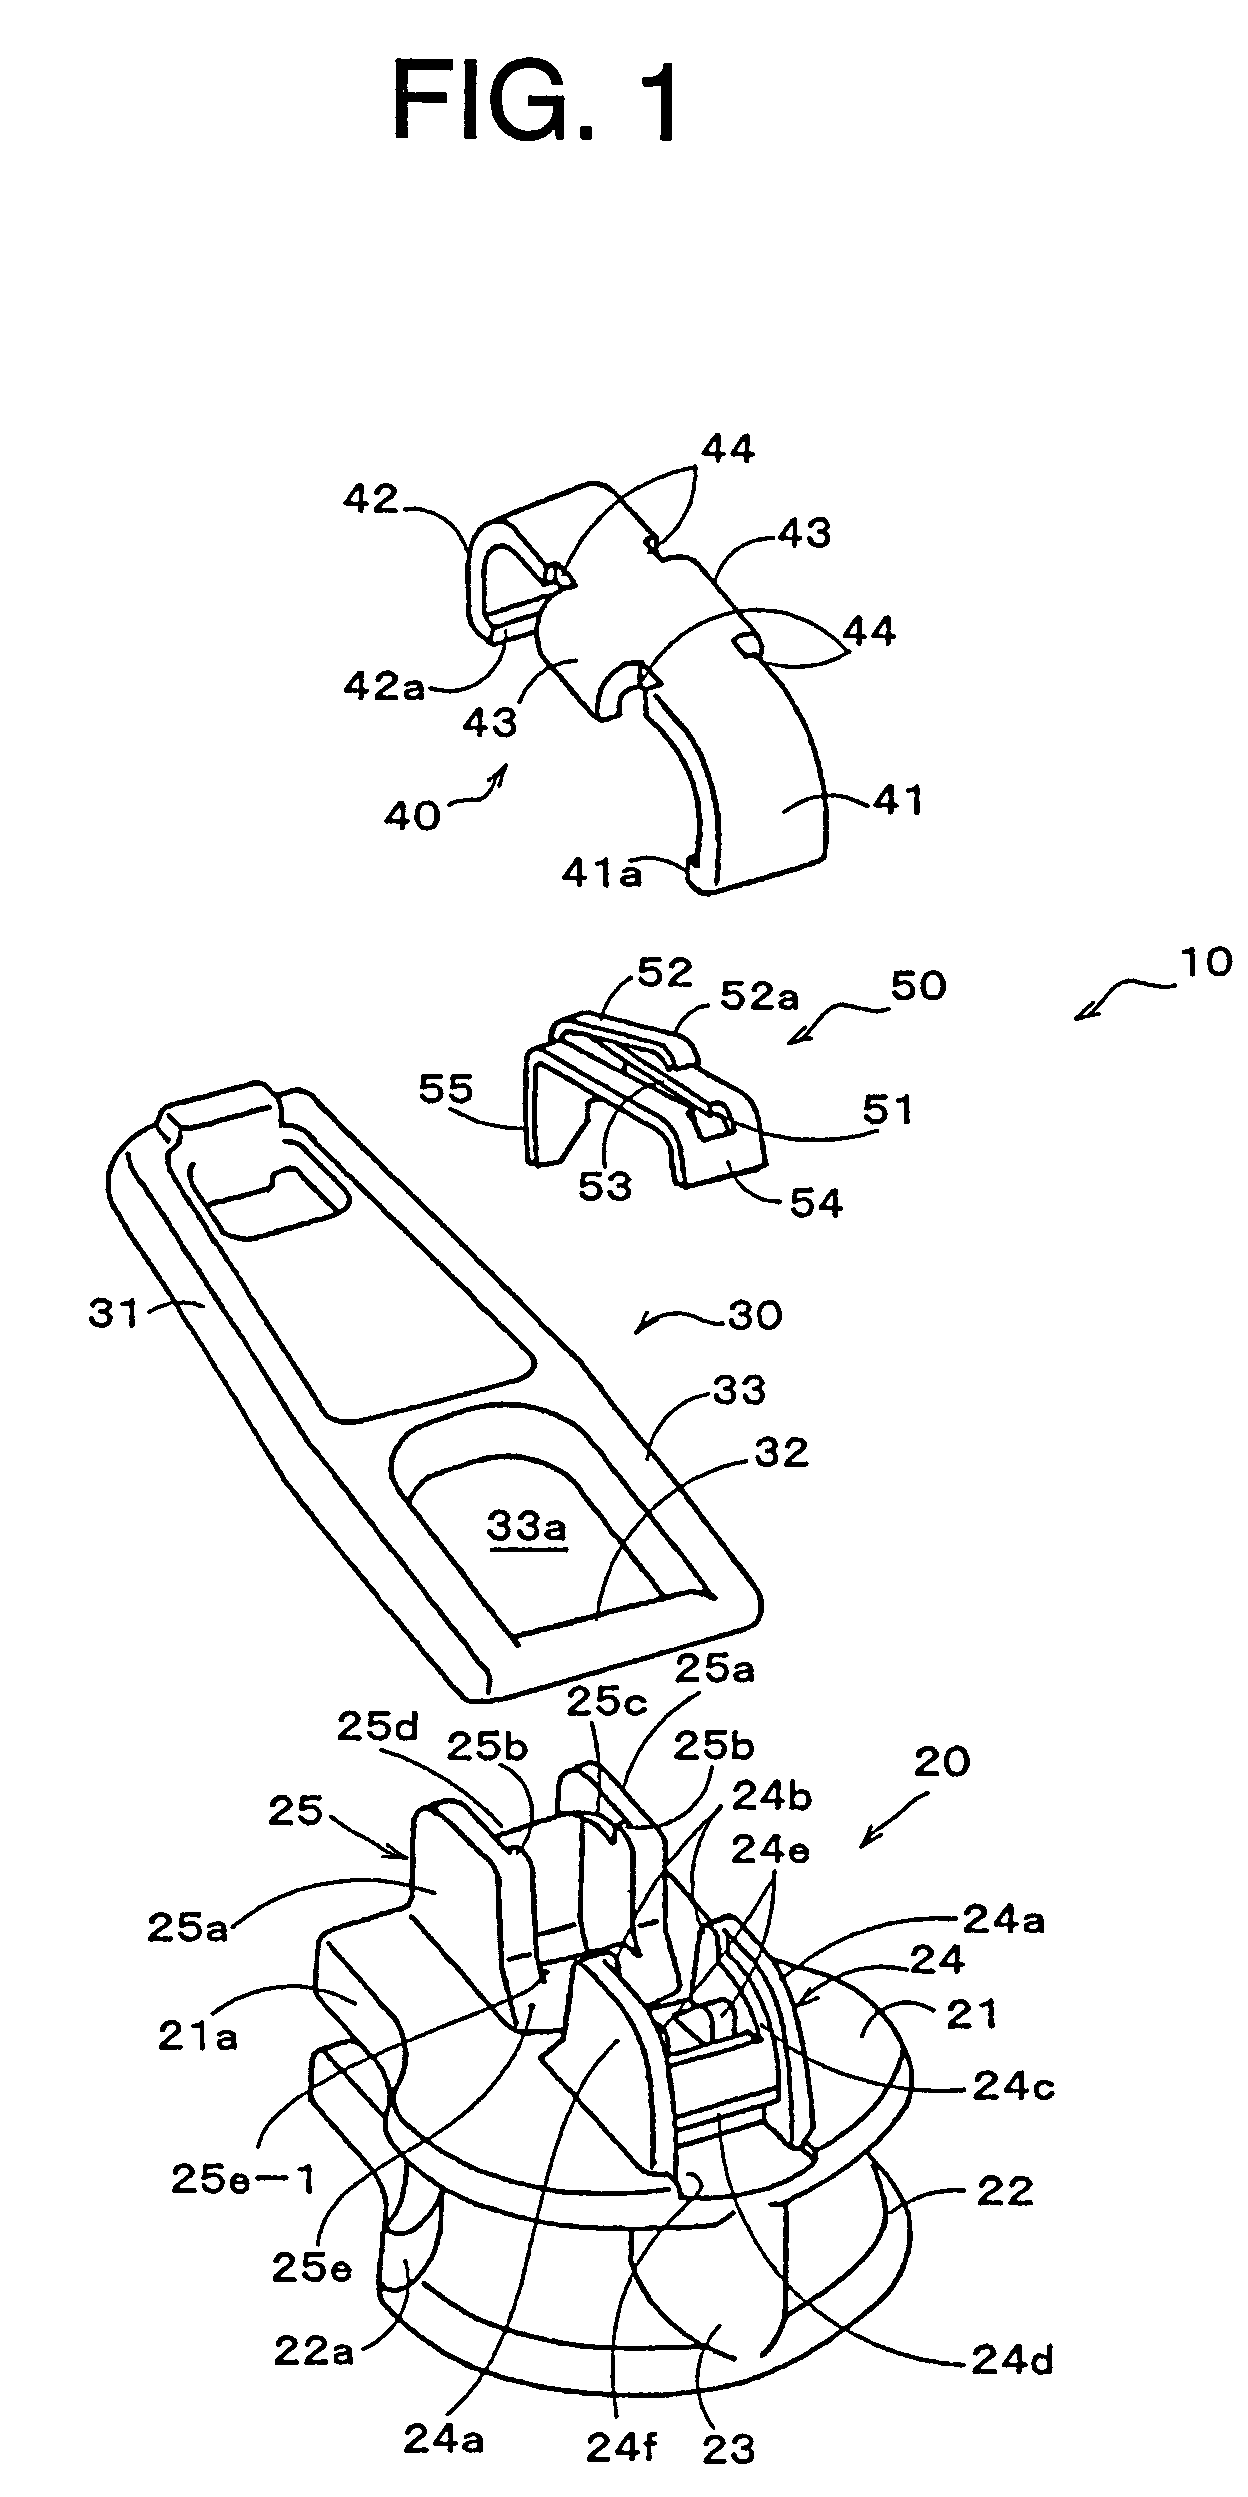 Slider for slide fastener and slider having a spring body mounted thereon